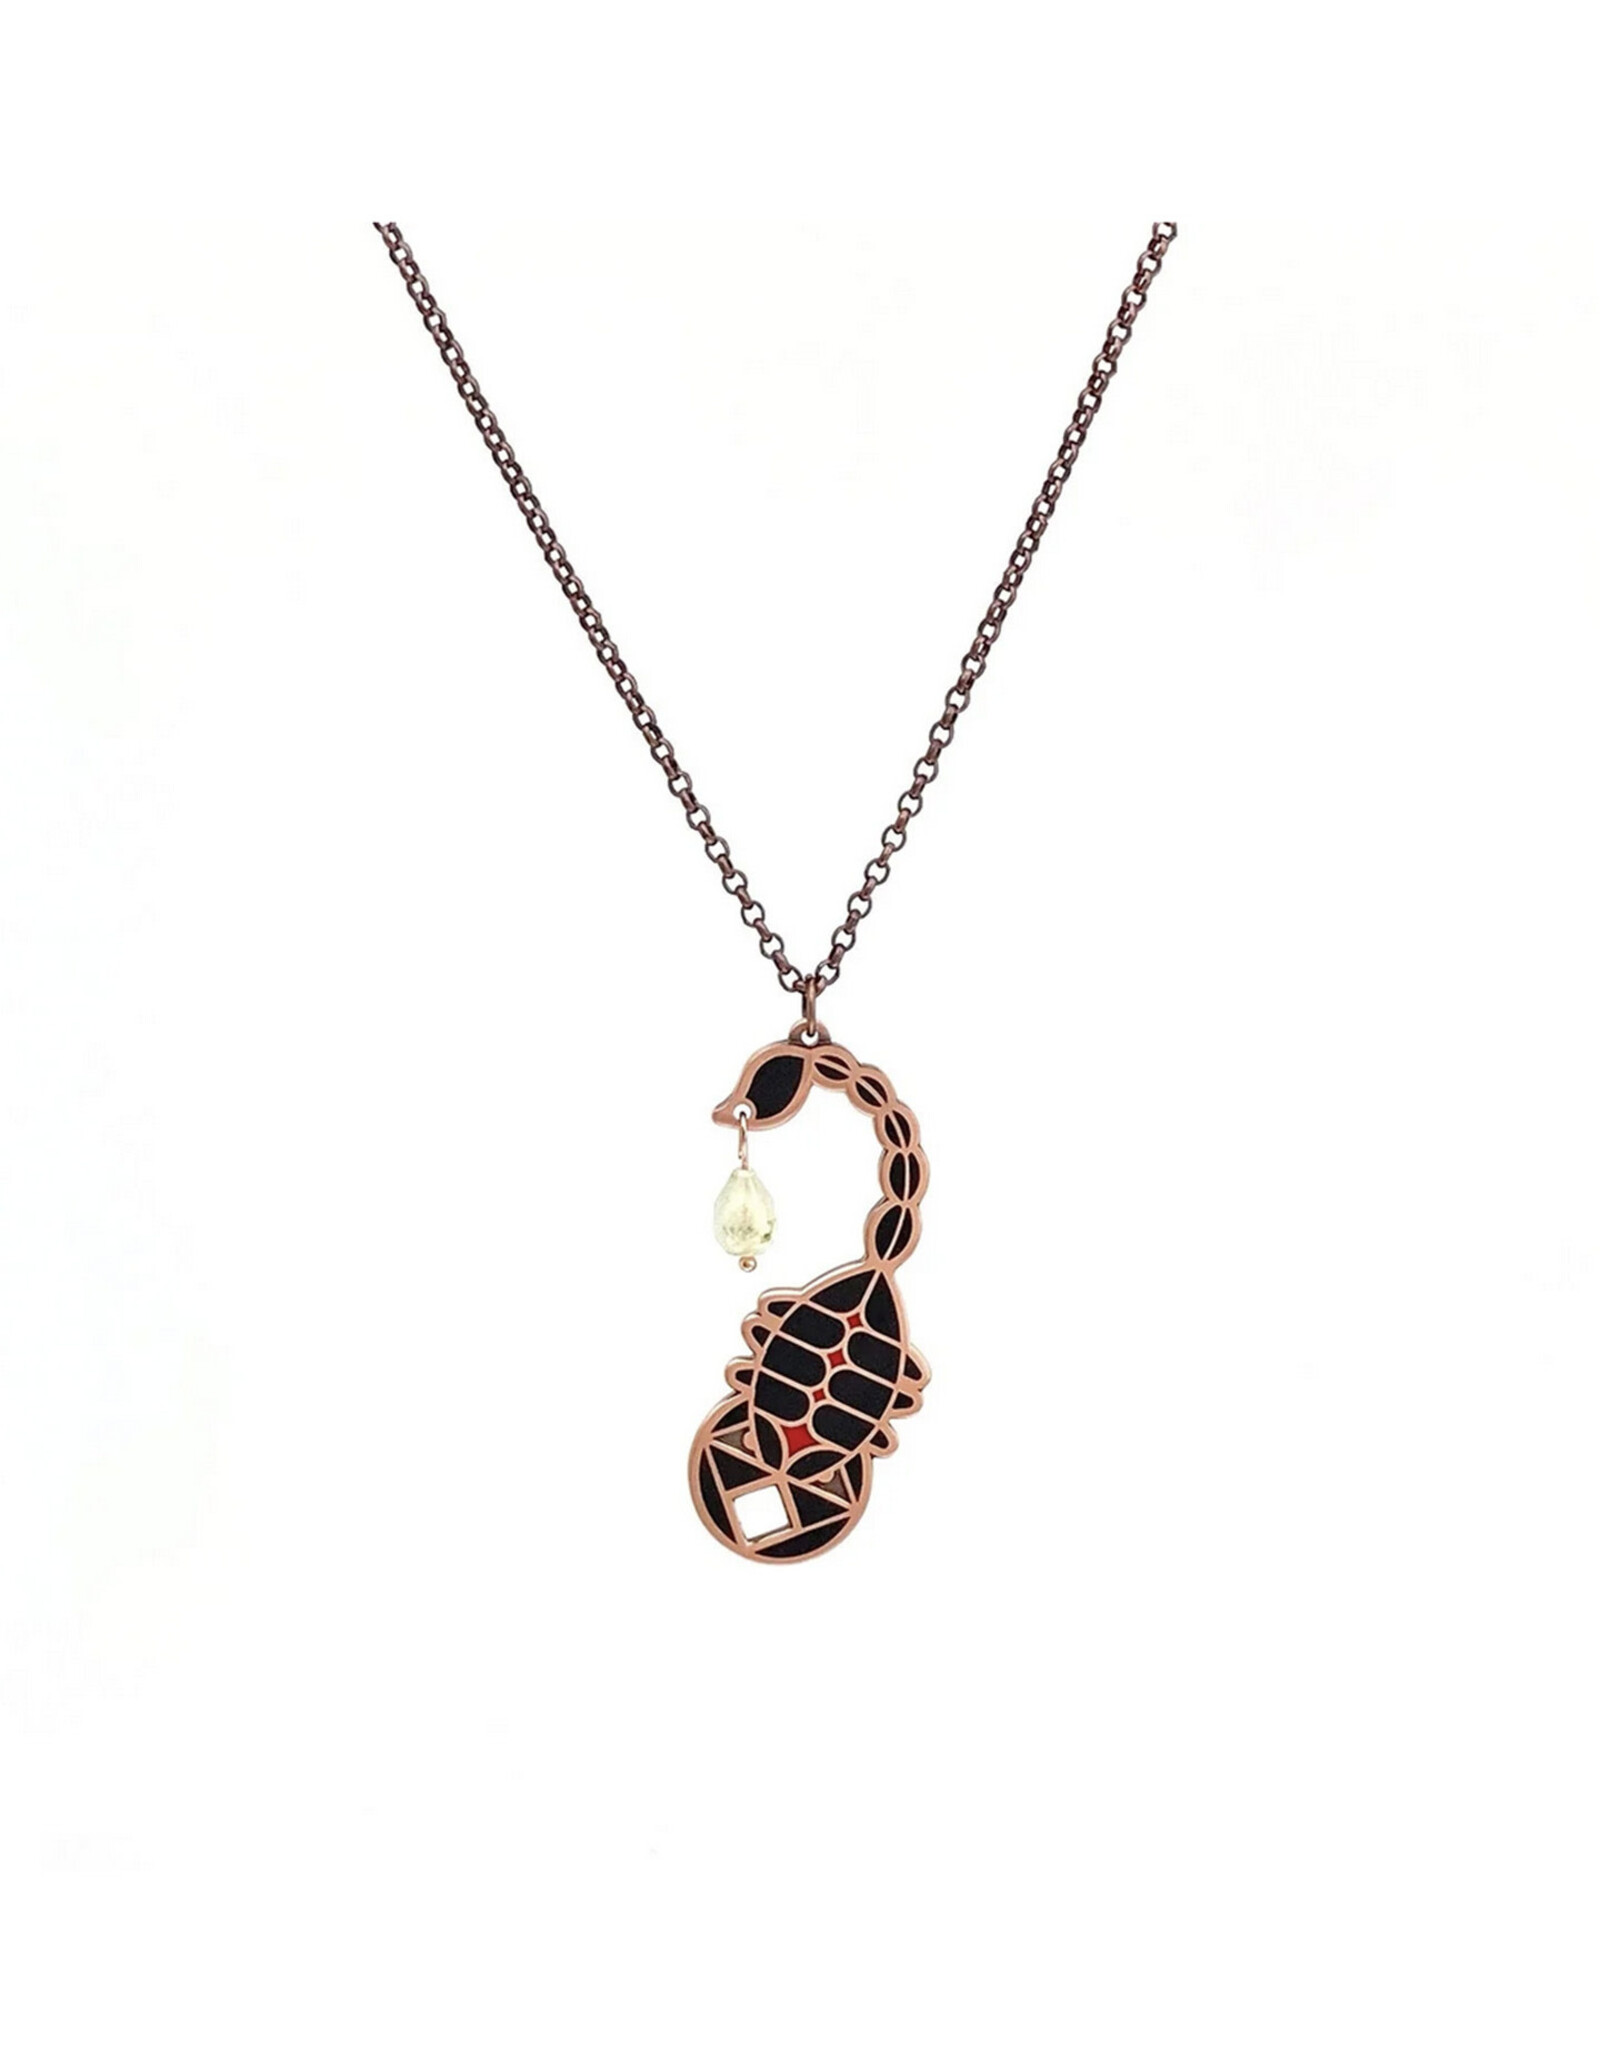 Ishara (Scorpion) Necklace